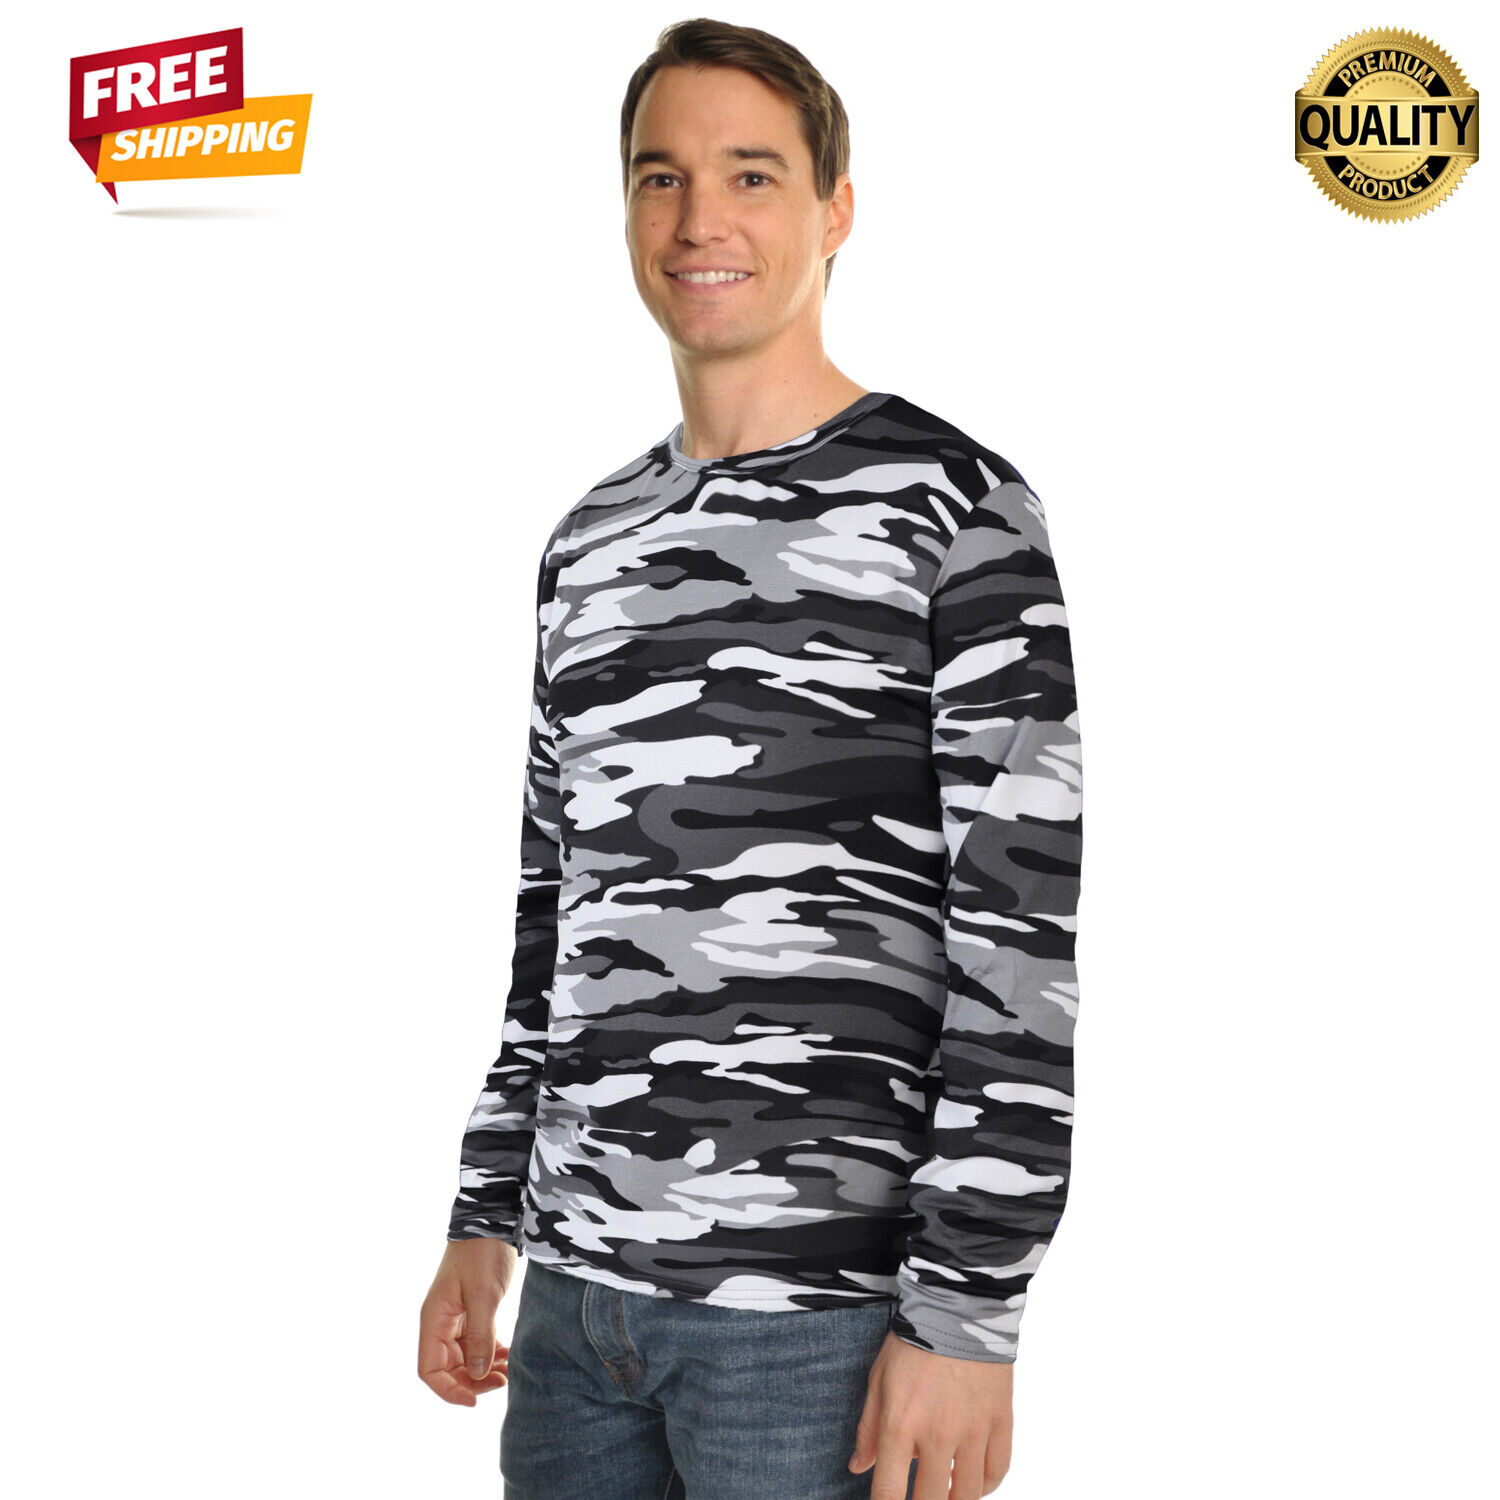 Men\'s Thermal Shirt Long Sleeve Camouflage Brushed Fleece Warm Crew Neck Top